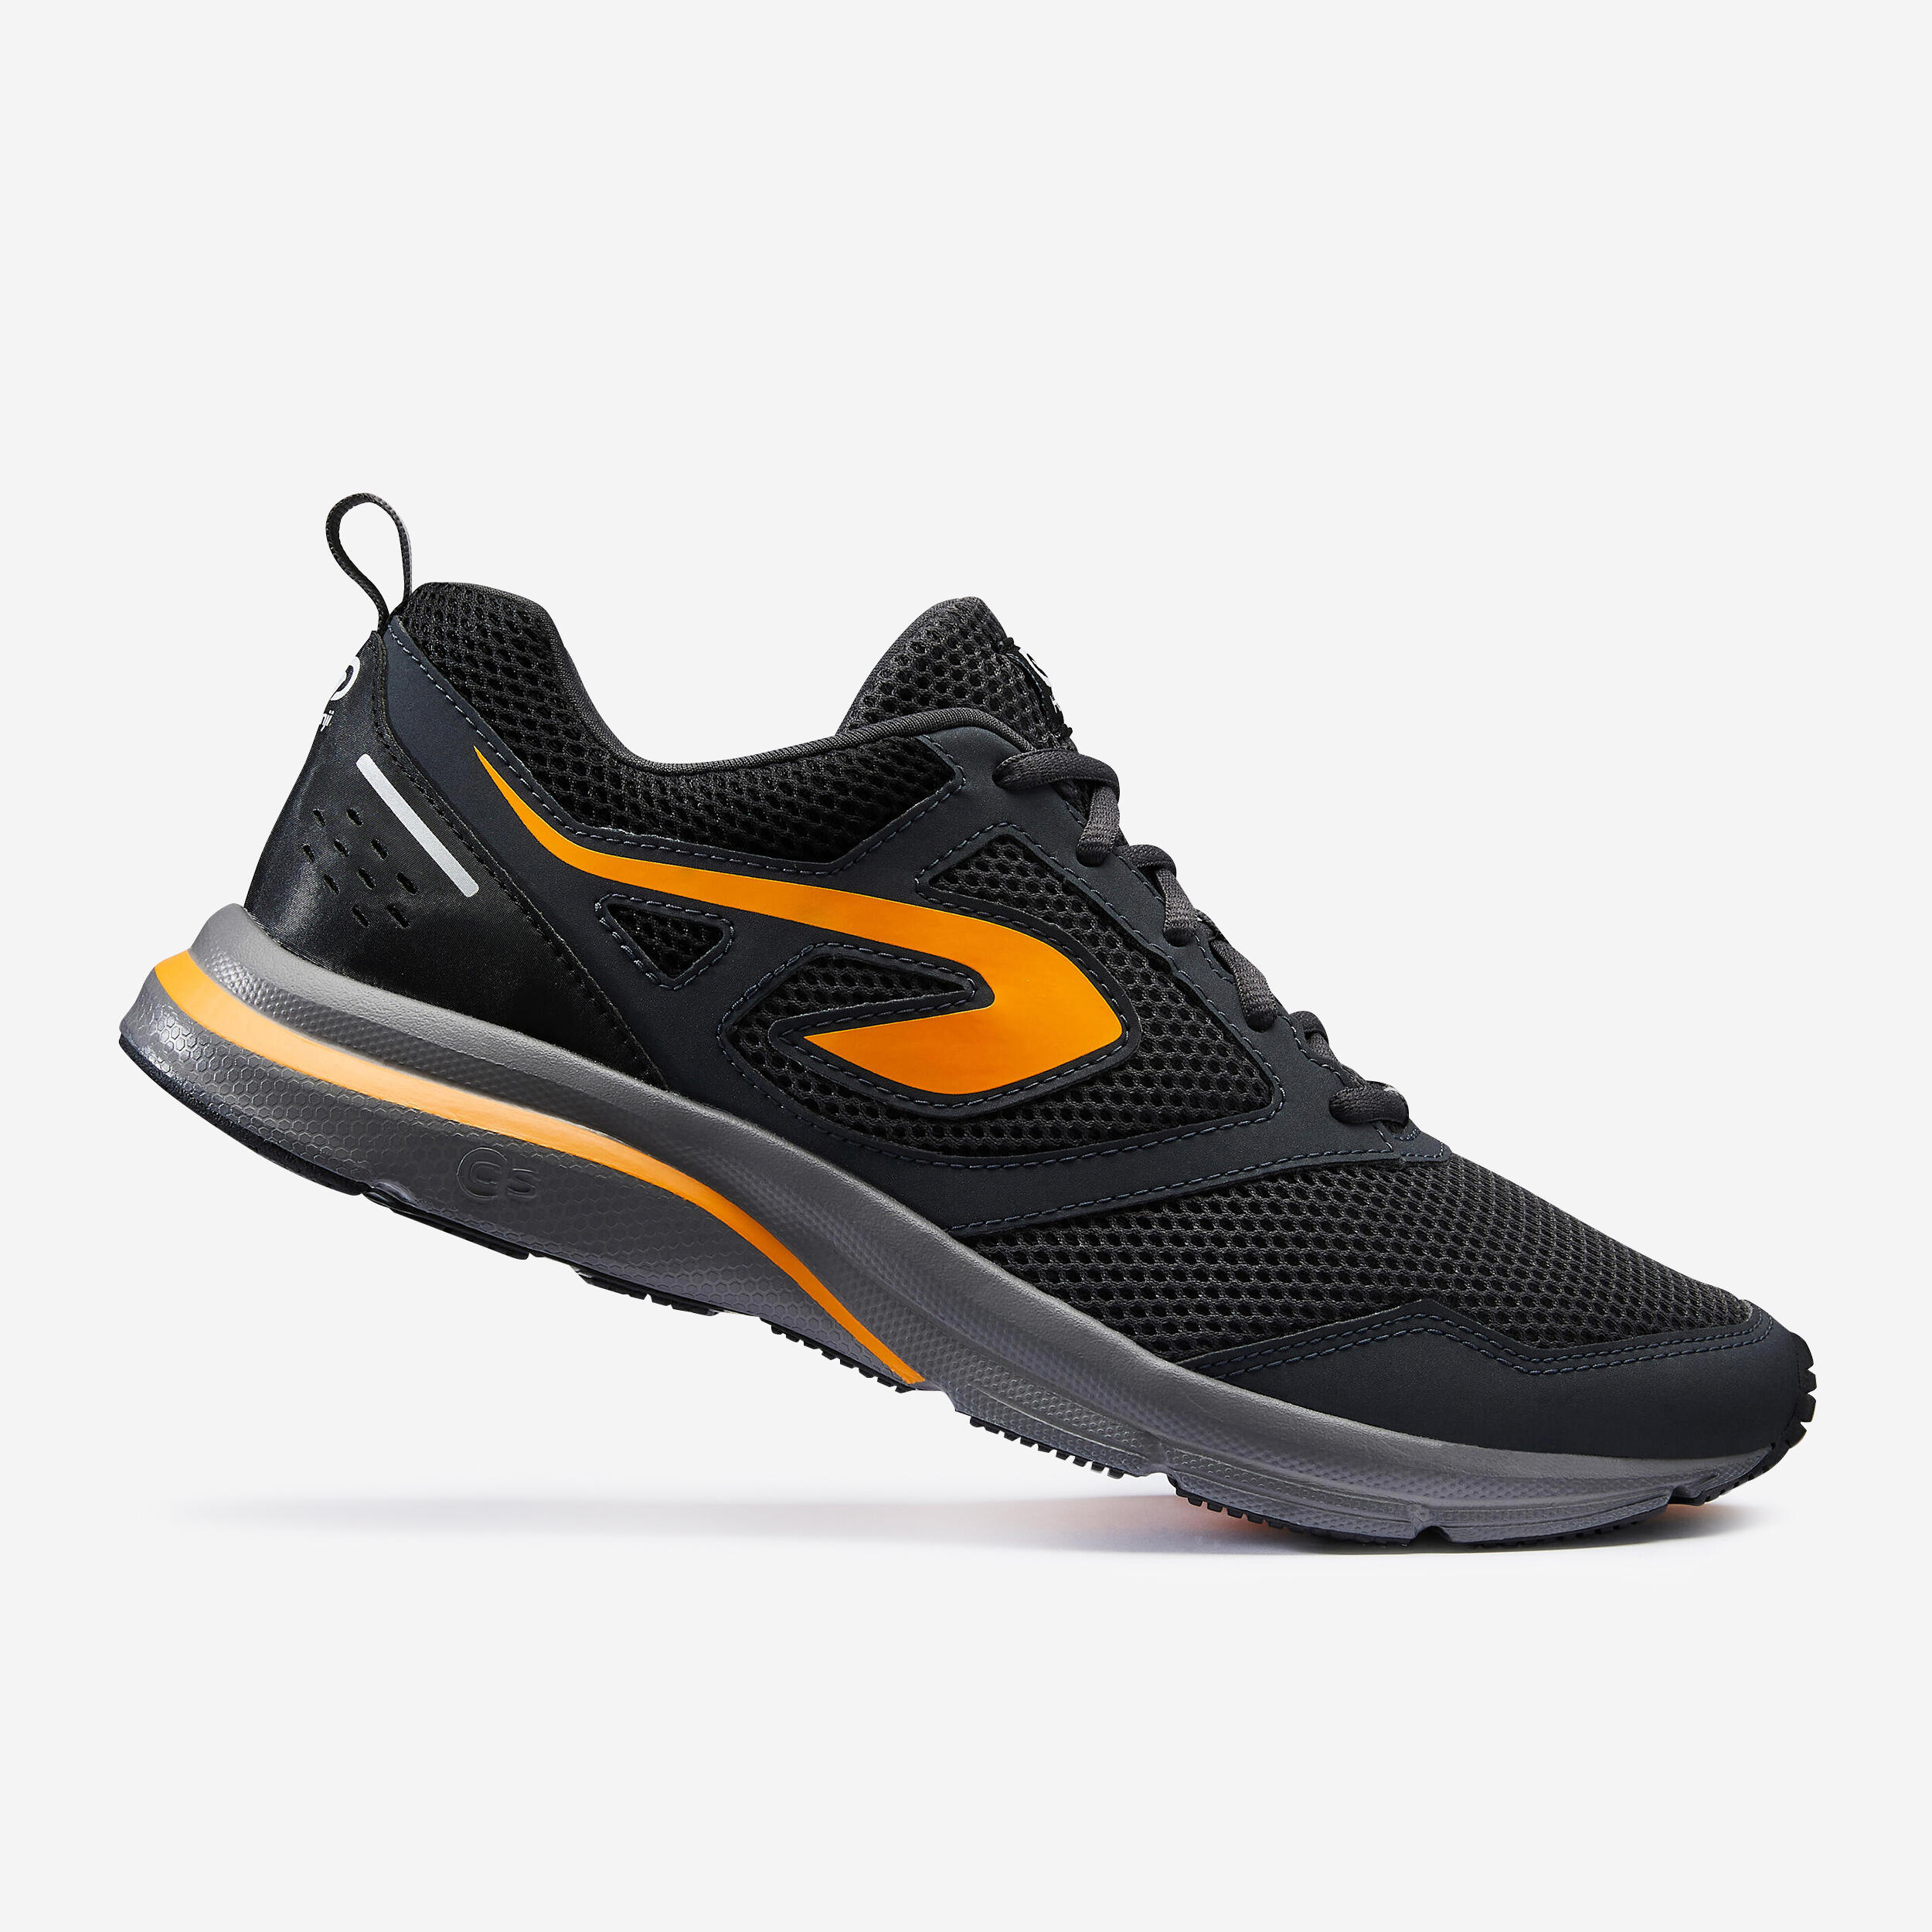 Kalenji Run Active Men's Running Shoes - Black/orange